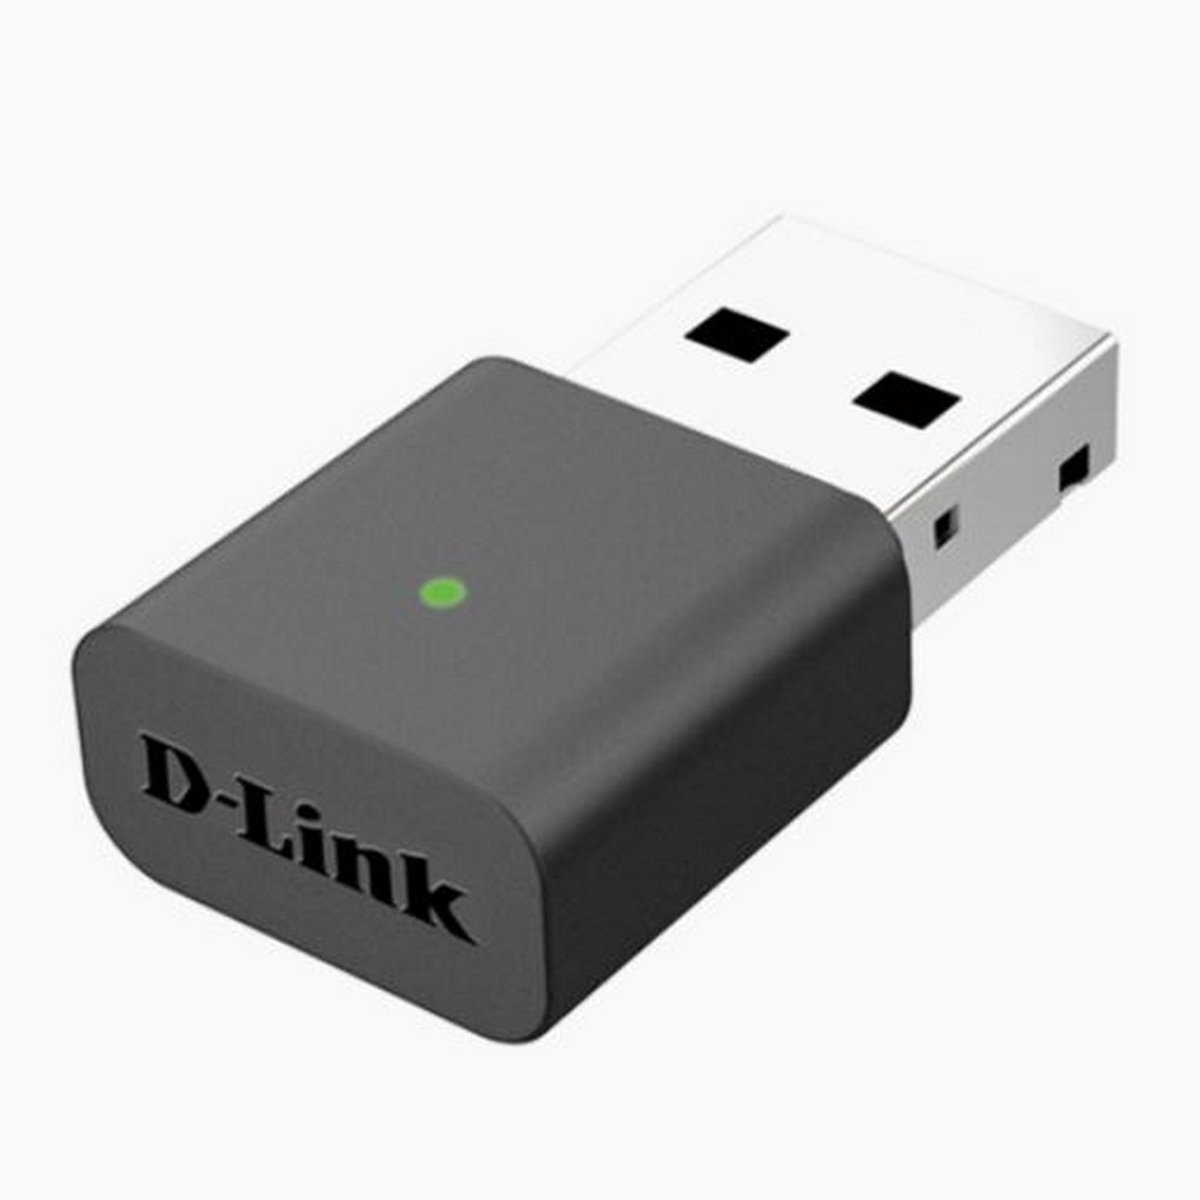 D-Link Wireless-N Nano USB Adapter DWA-131